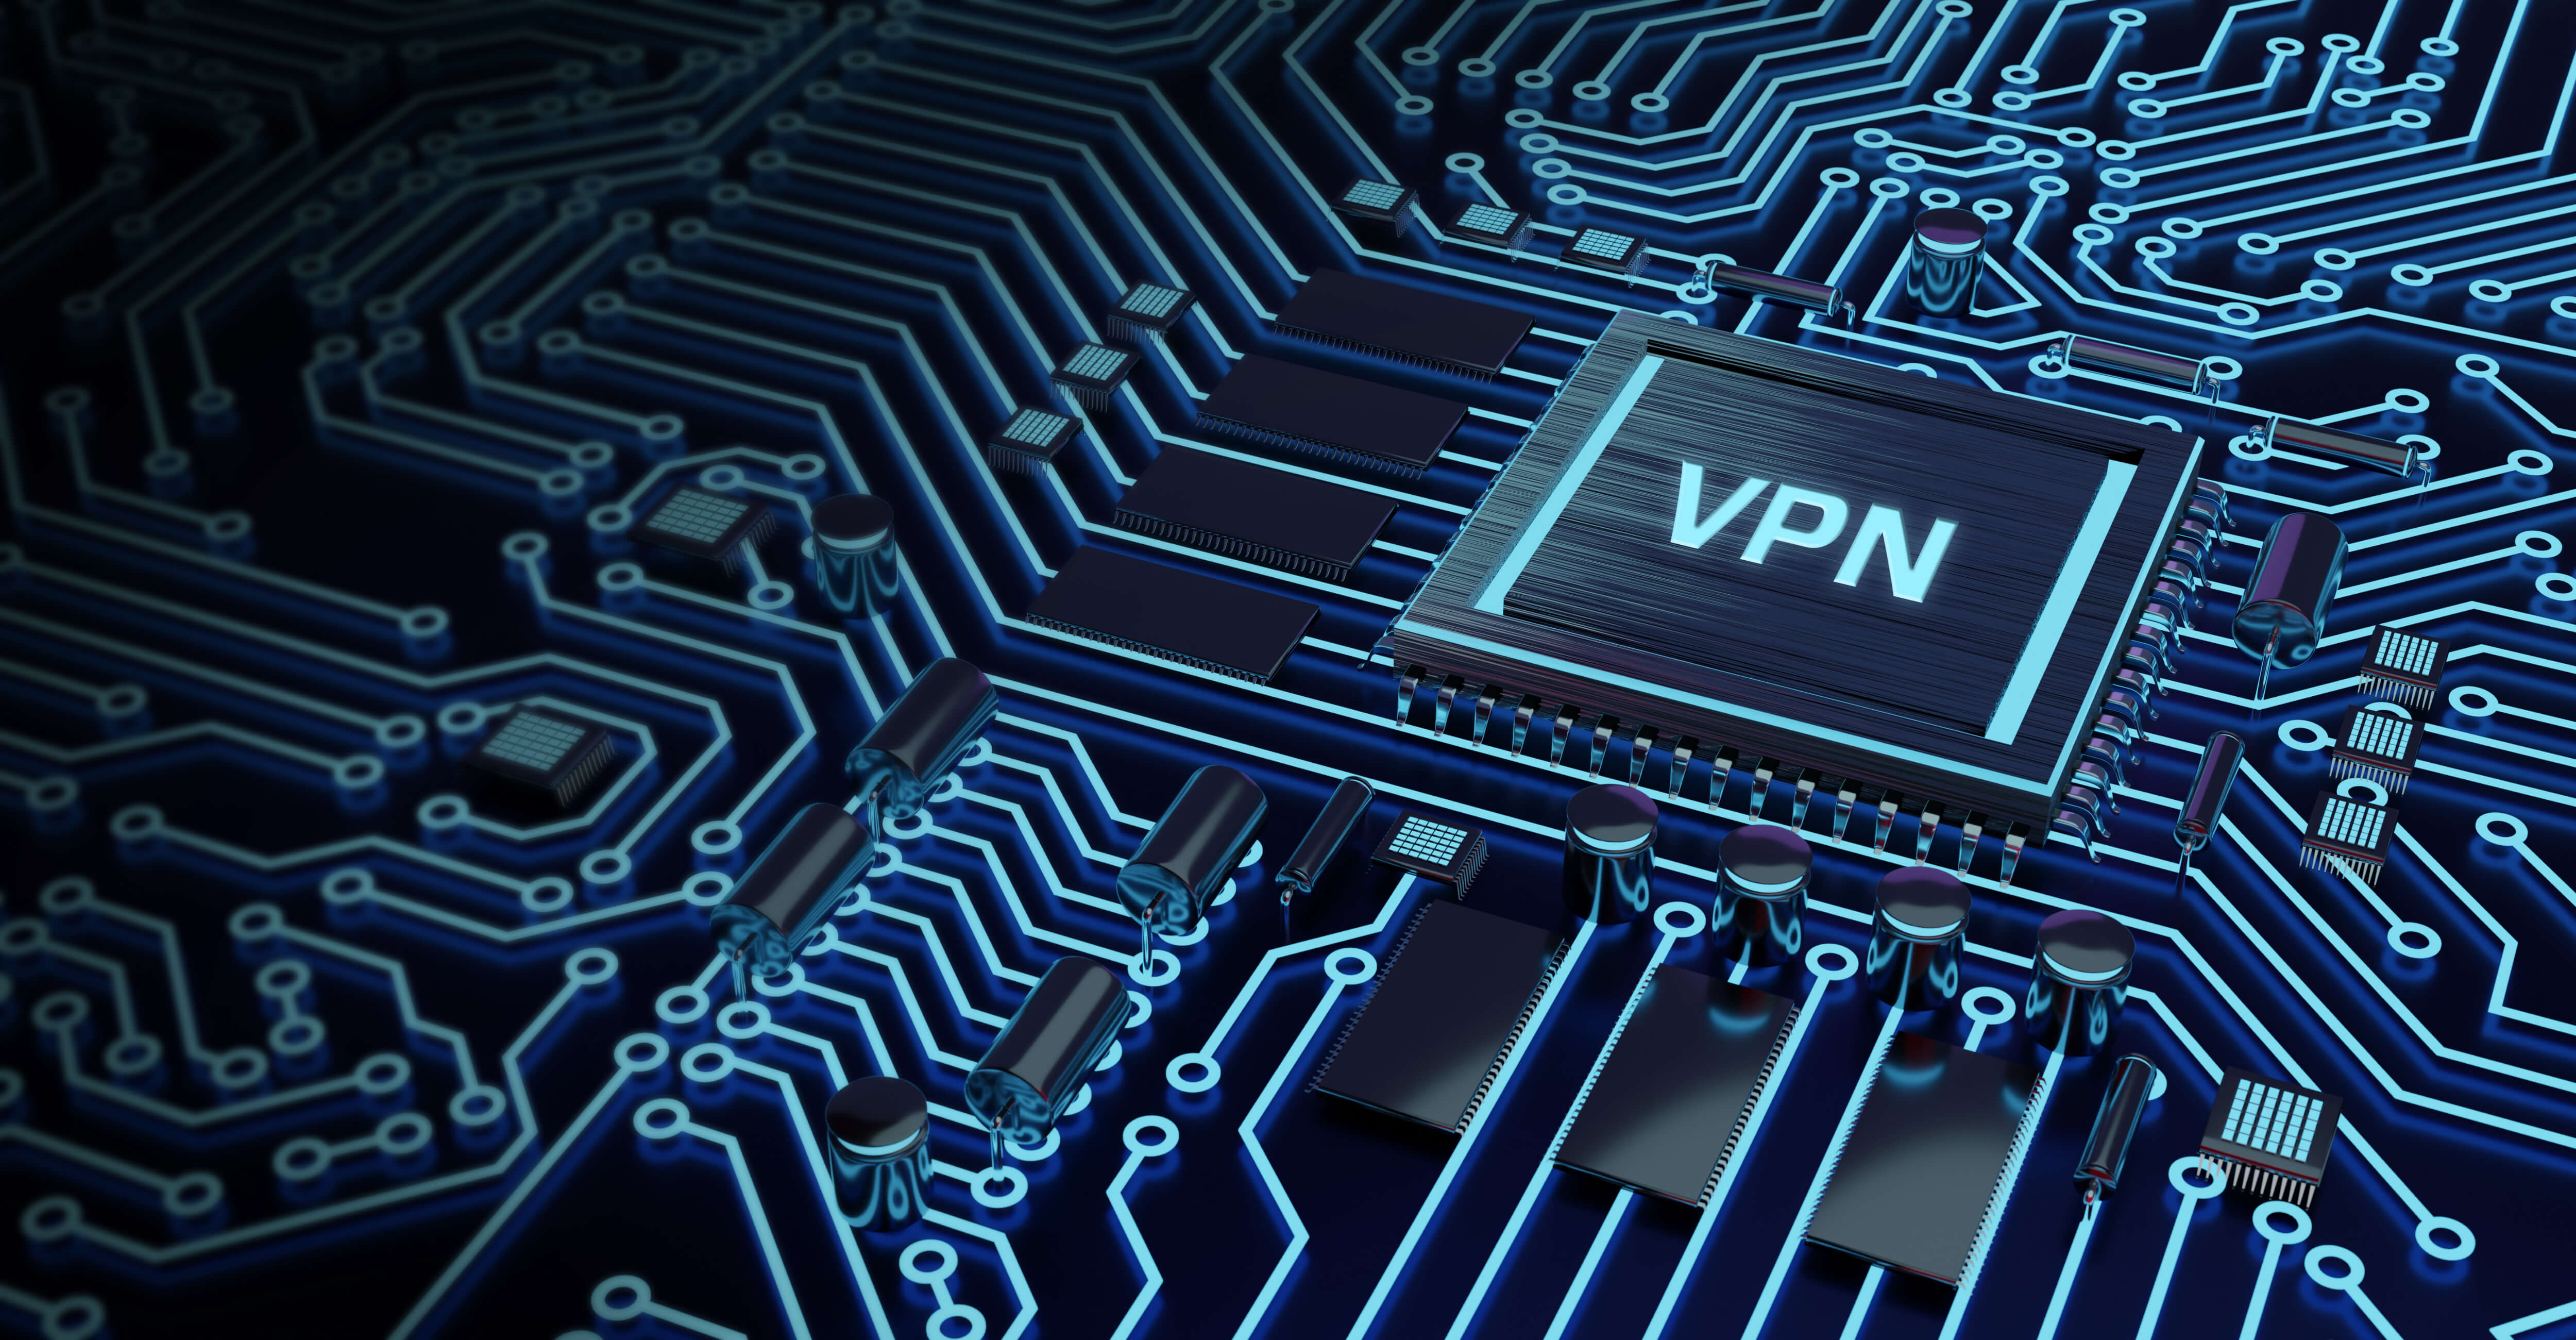 VPN, Remote Access Security Concept